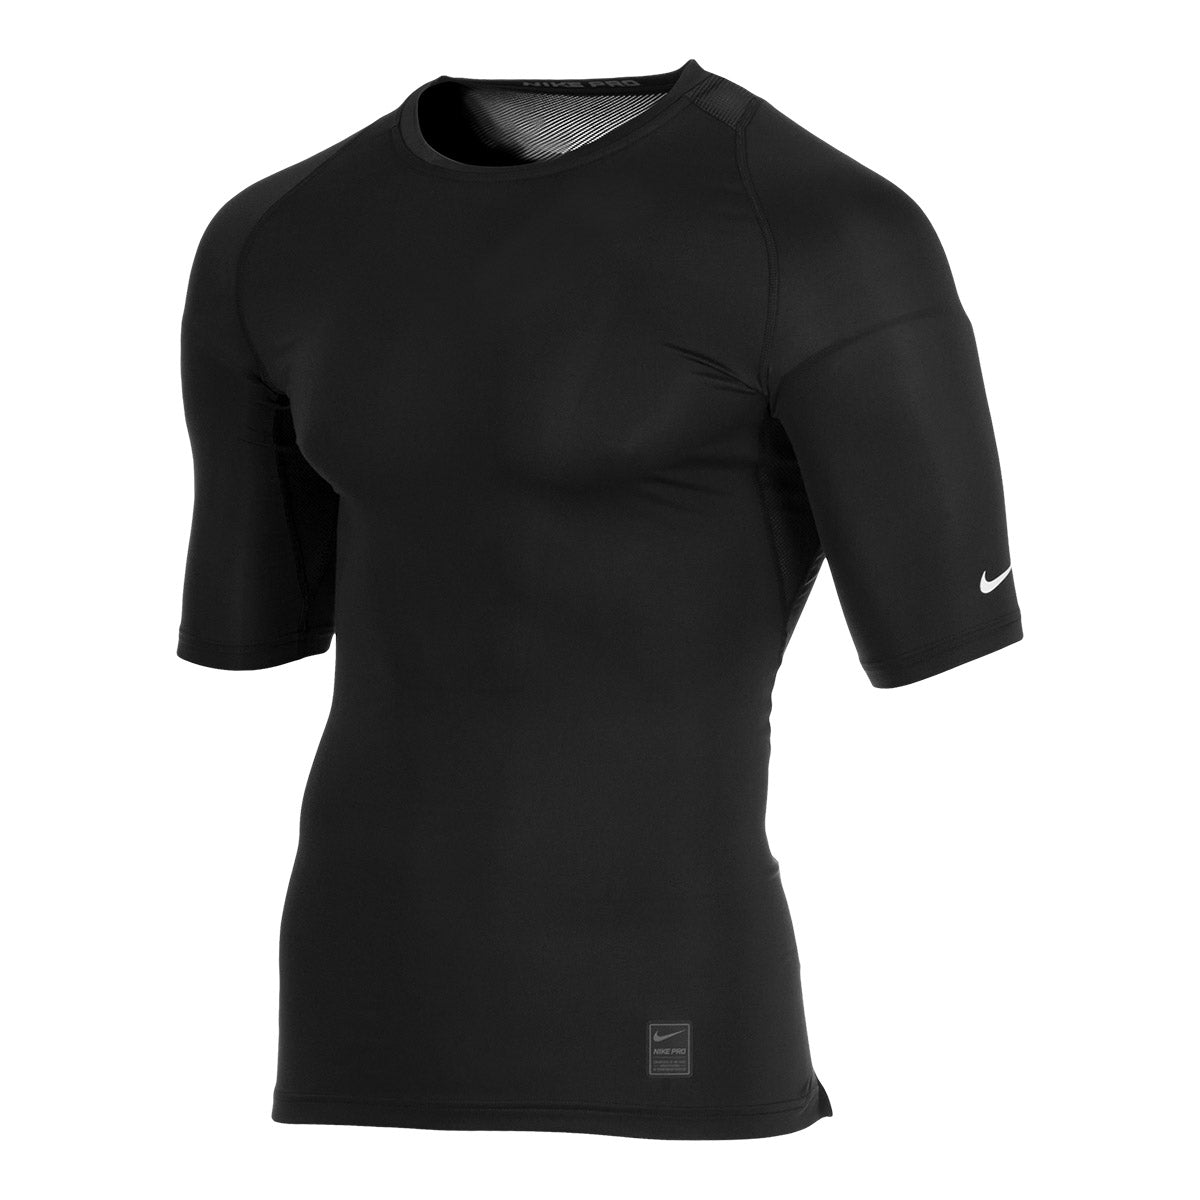 buurman bord Verzakking Nike Men's Compression 1/2 Sleeve Top – PROOZY